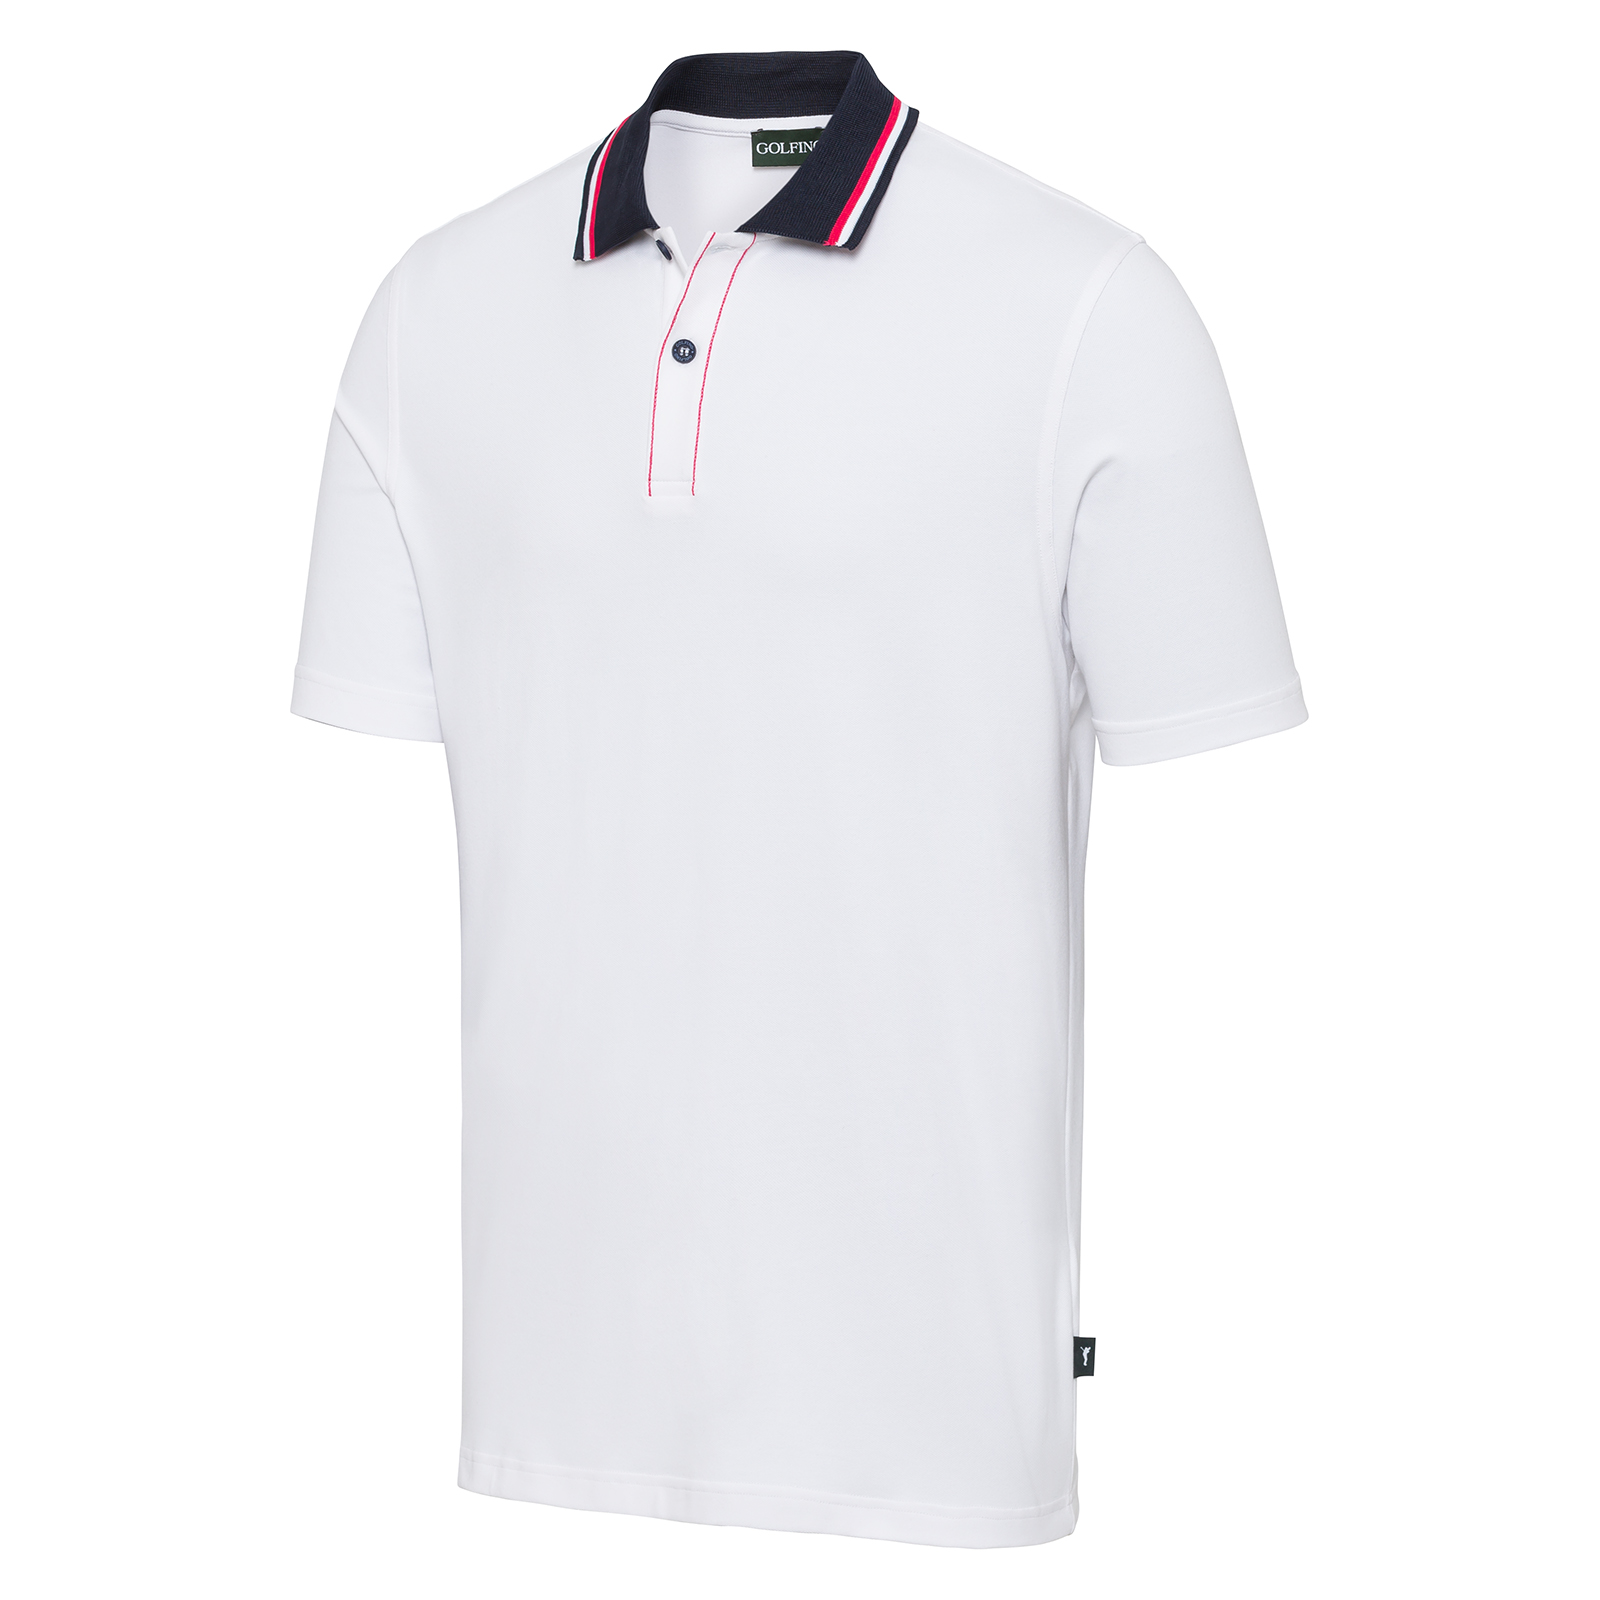 Men's golf polo shirt with sun protection